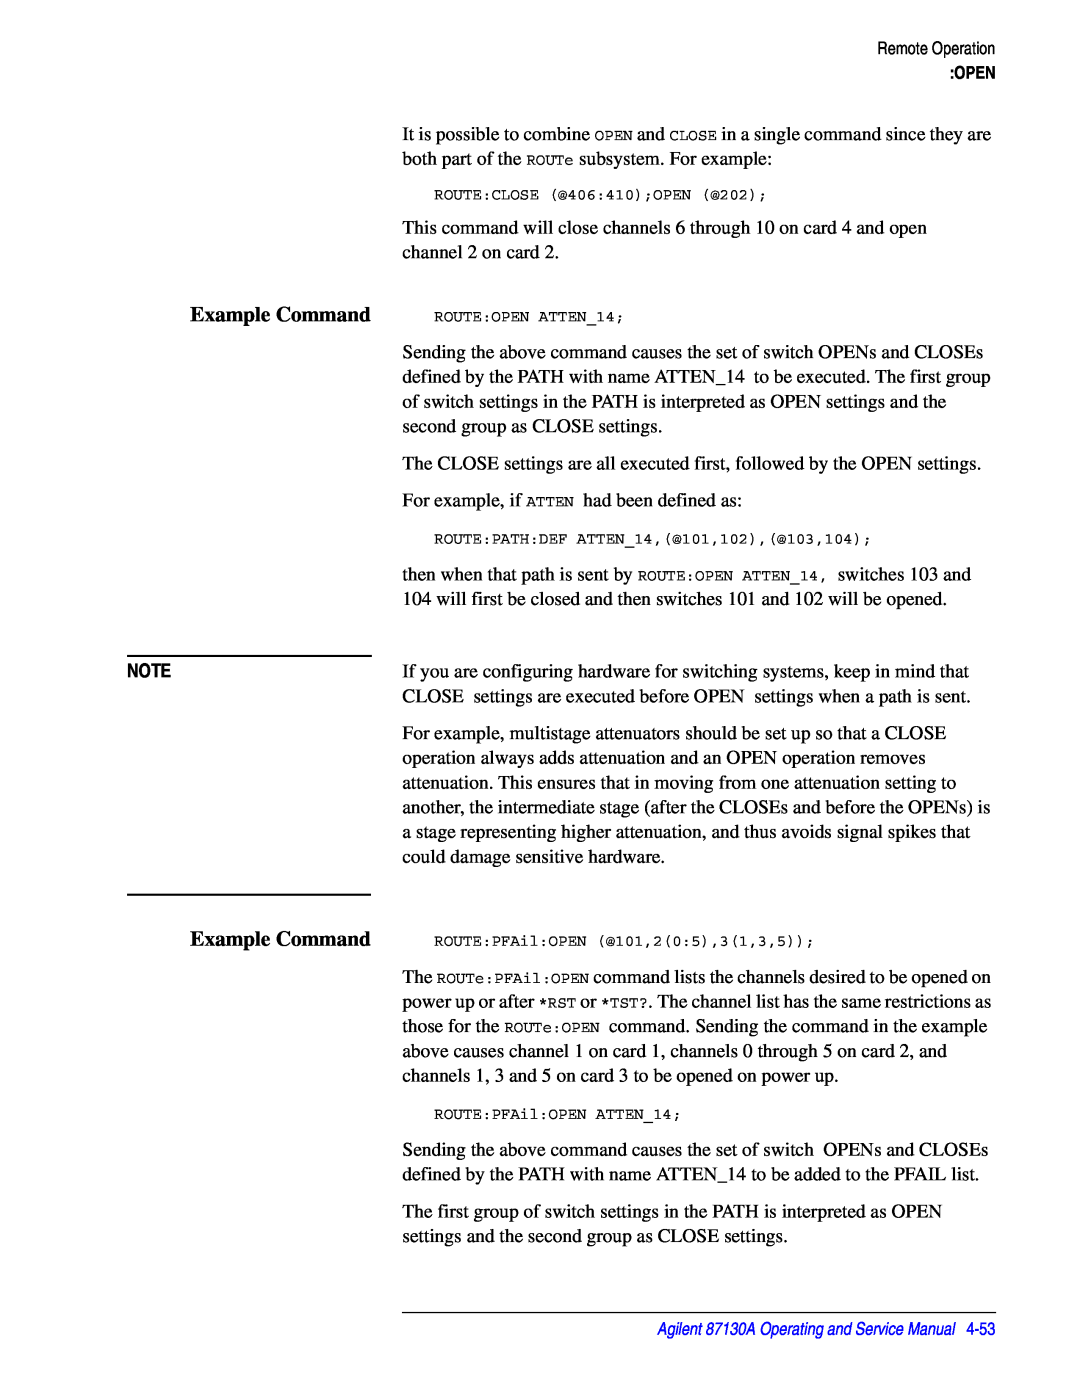 Agilent Technologies 87130A manual Example Command 